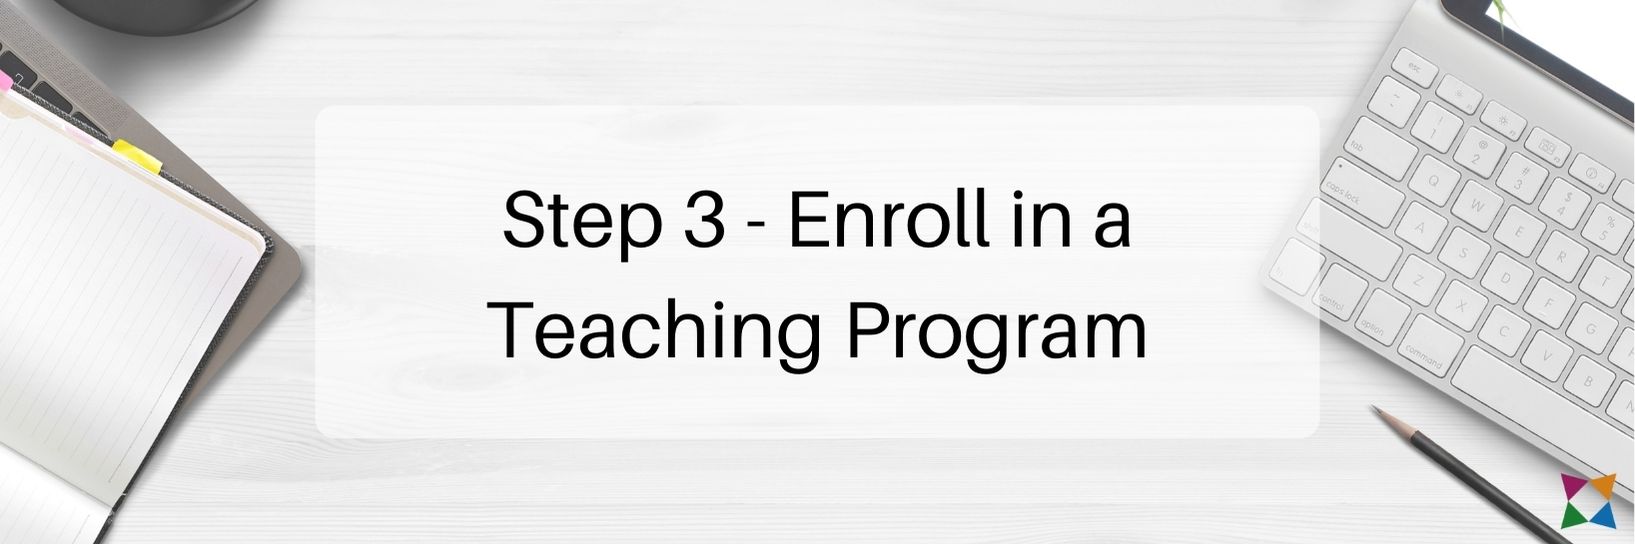 Enroll in a Teaching Program for Business Education